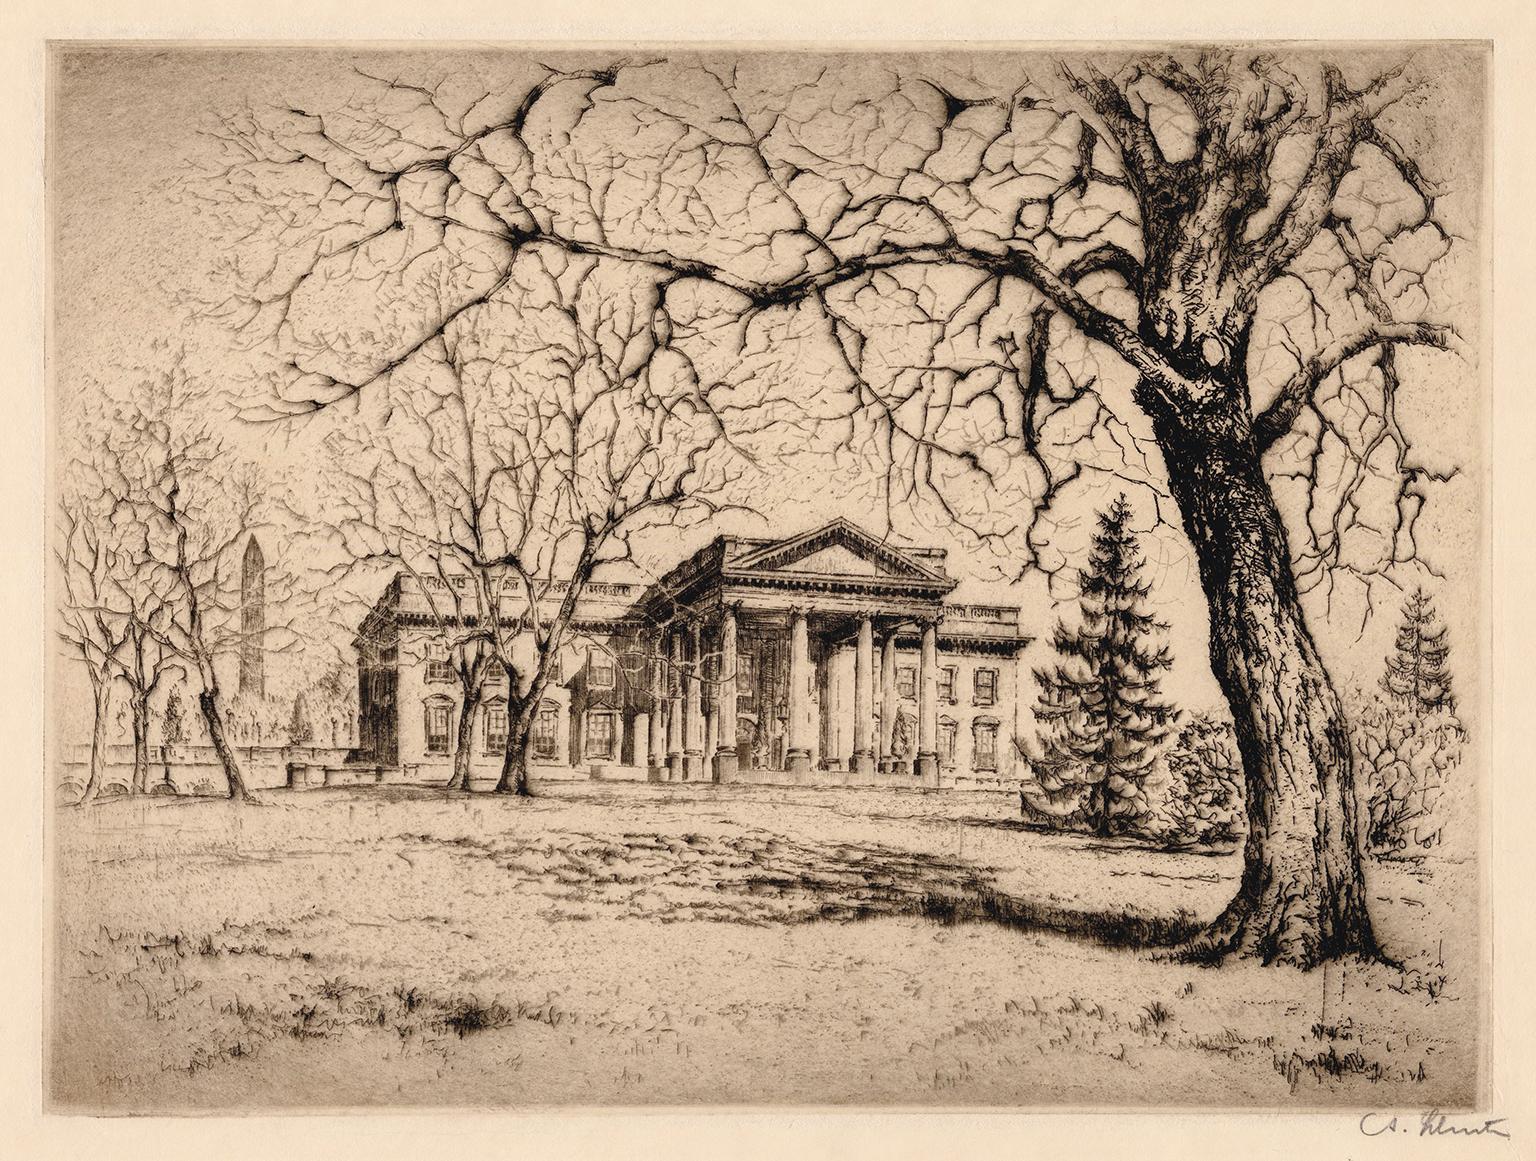 Anton Schutz Landscape Print - 'The White House' — 1920s Realism, Washington D.C.